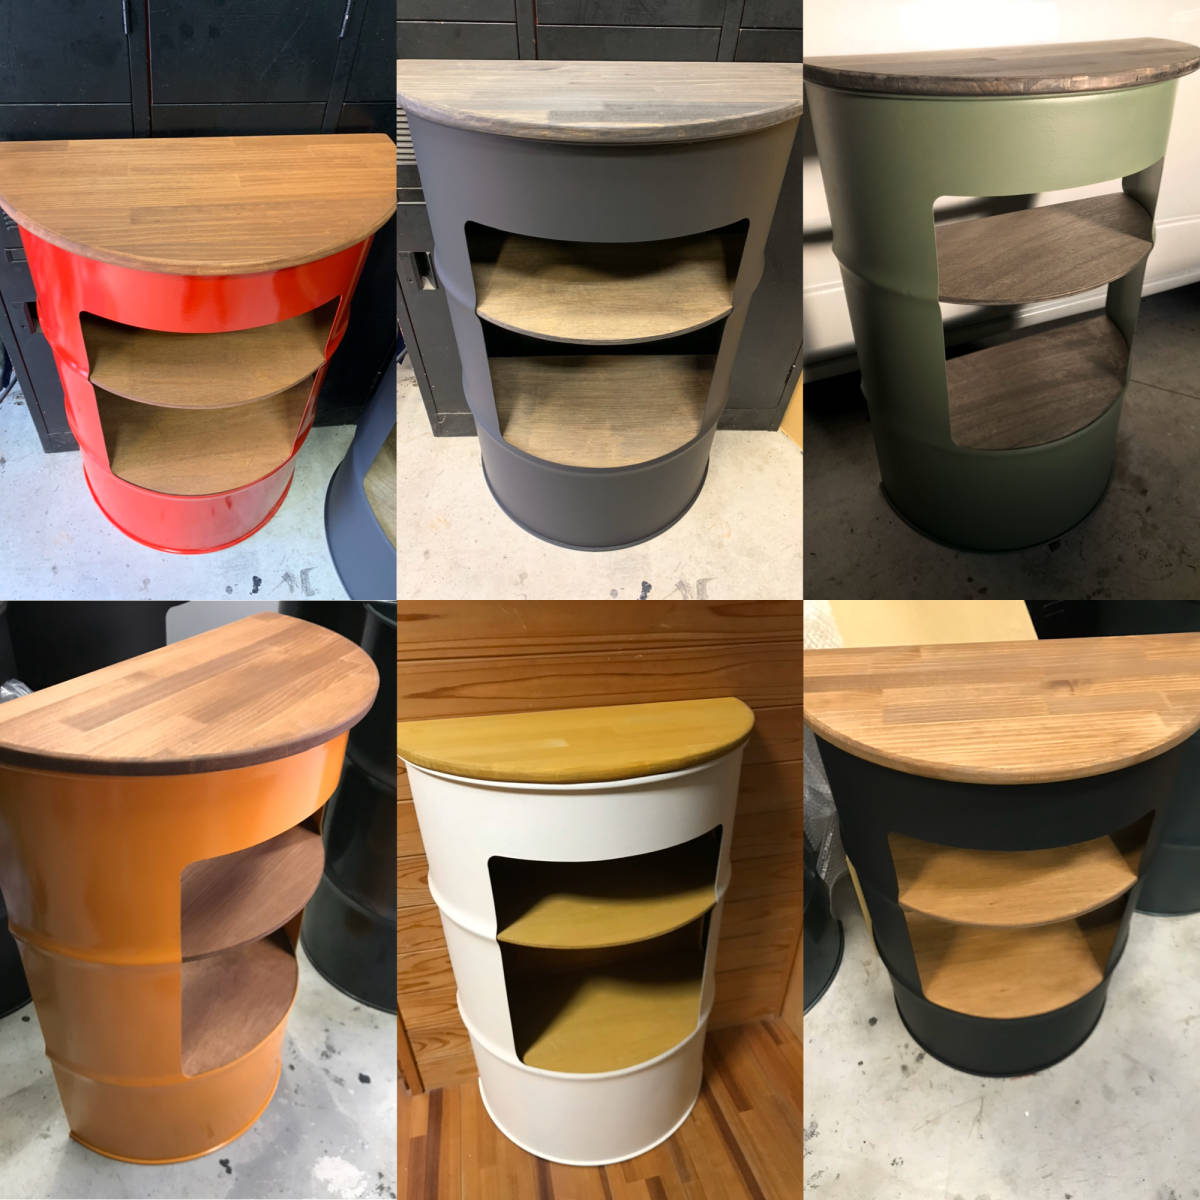  drum can table remake hand made half size space-saving reji Cafe bar counter garage storage display case furniture interior 